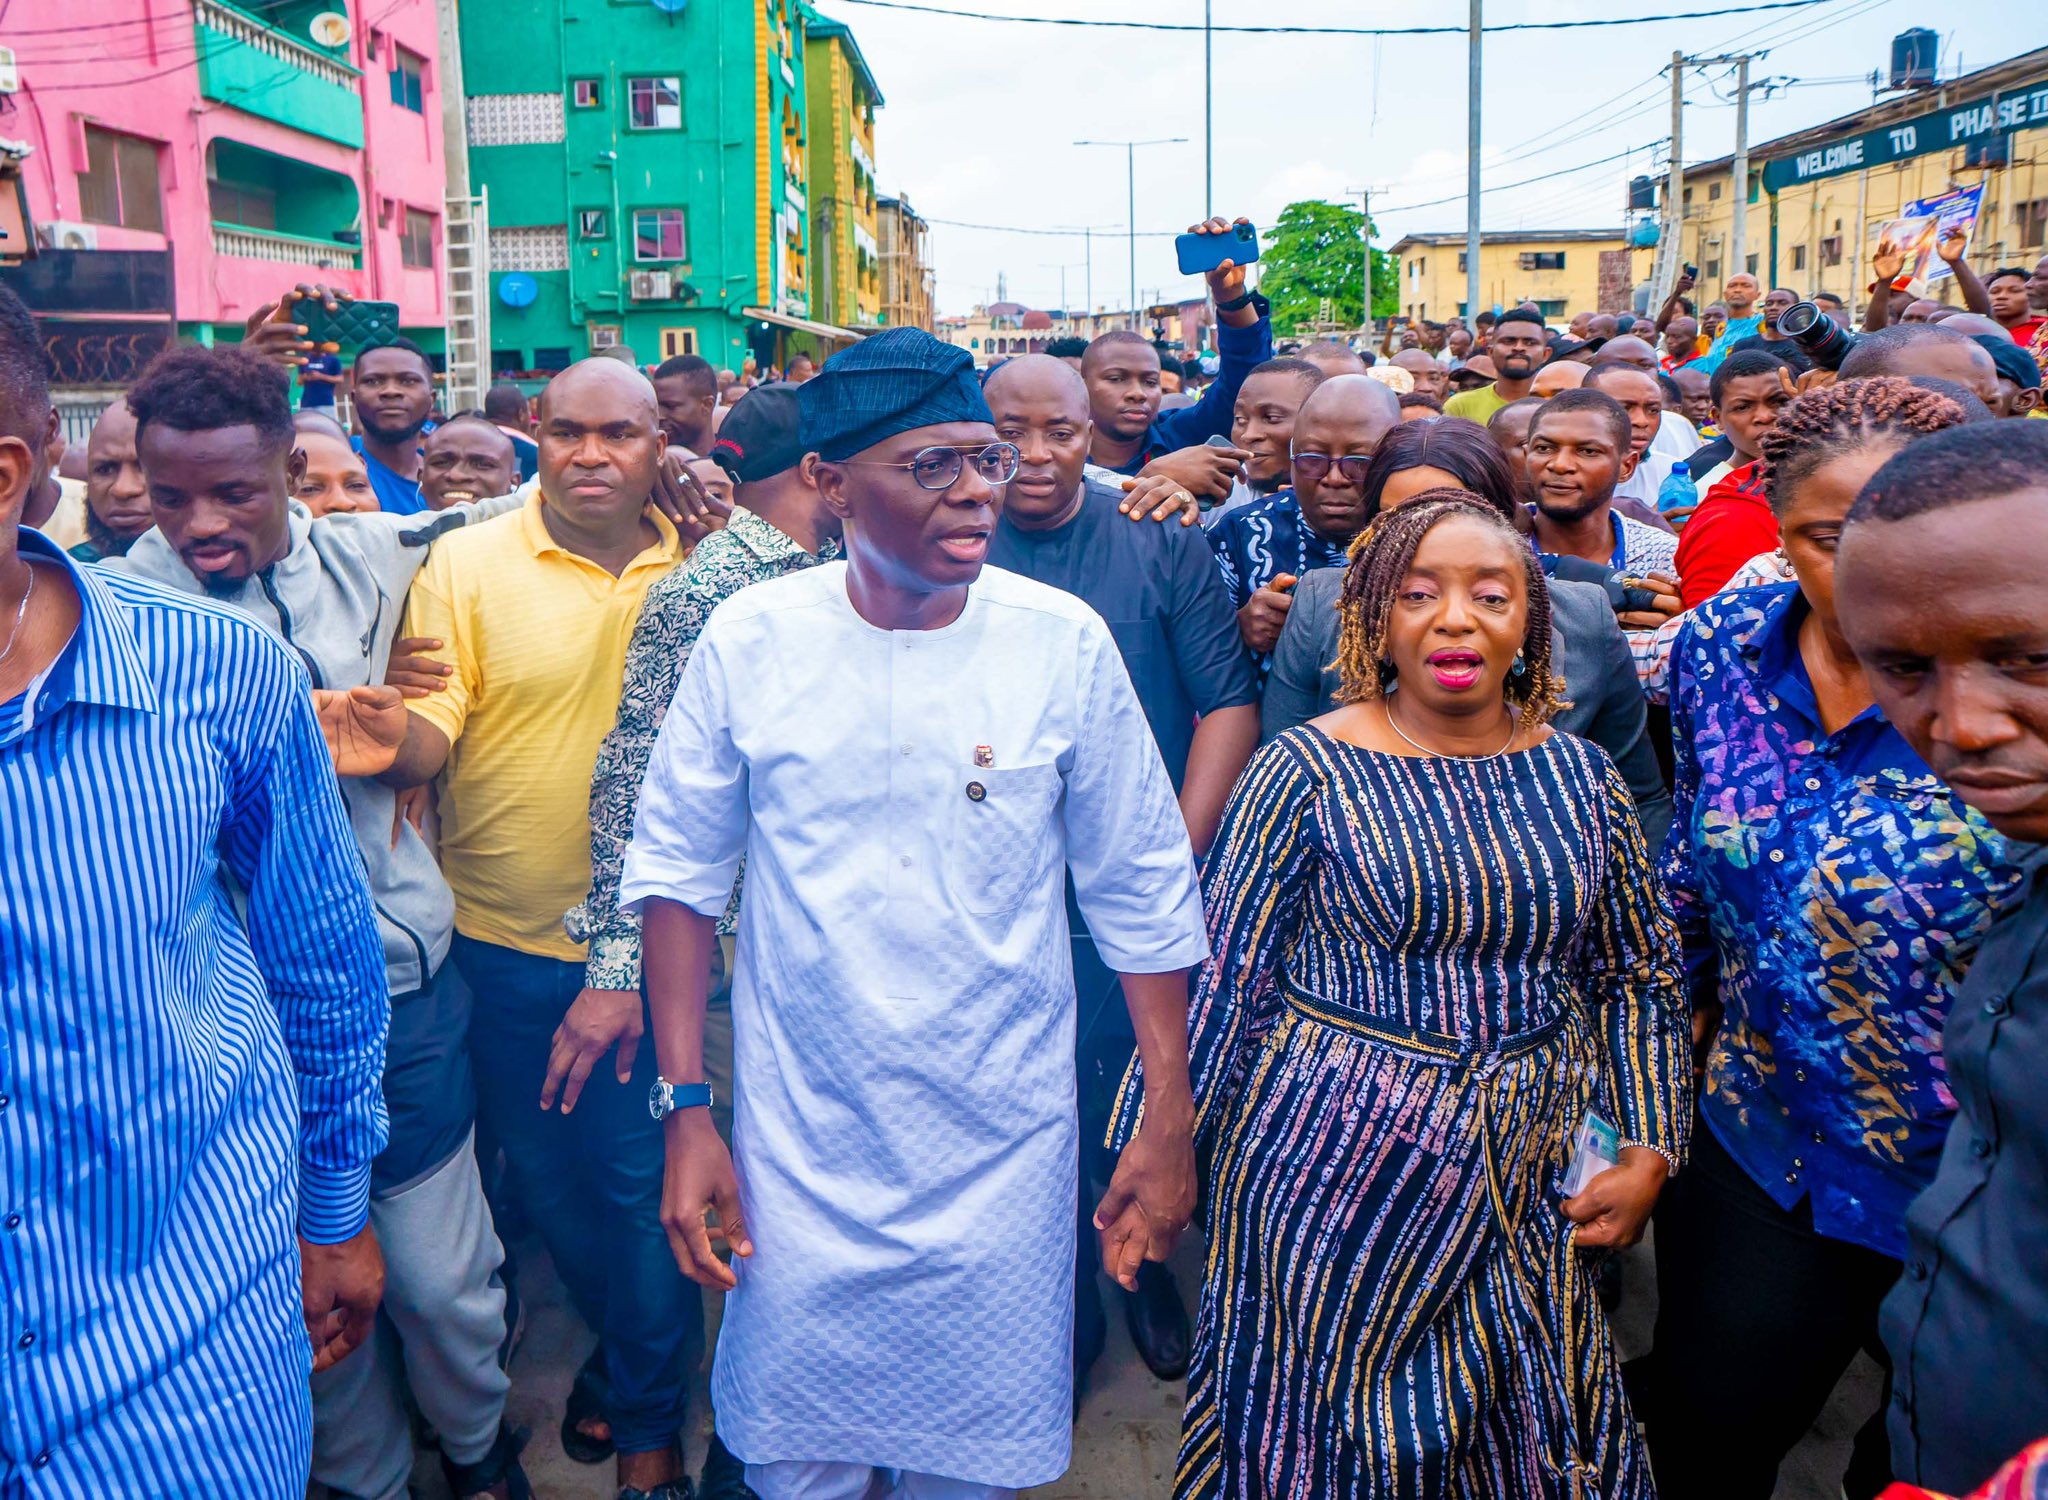 Tinubu, Sanwo-Olu vote, urge Nigerians to go out and vote peacefully (PHOTOS)